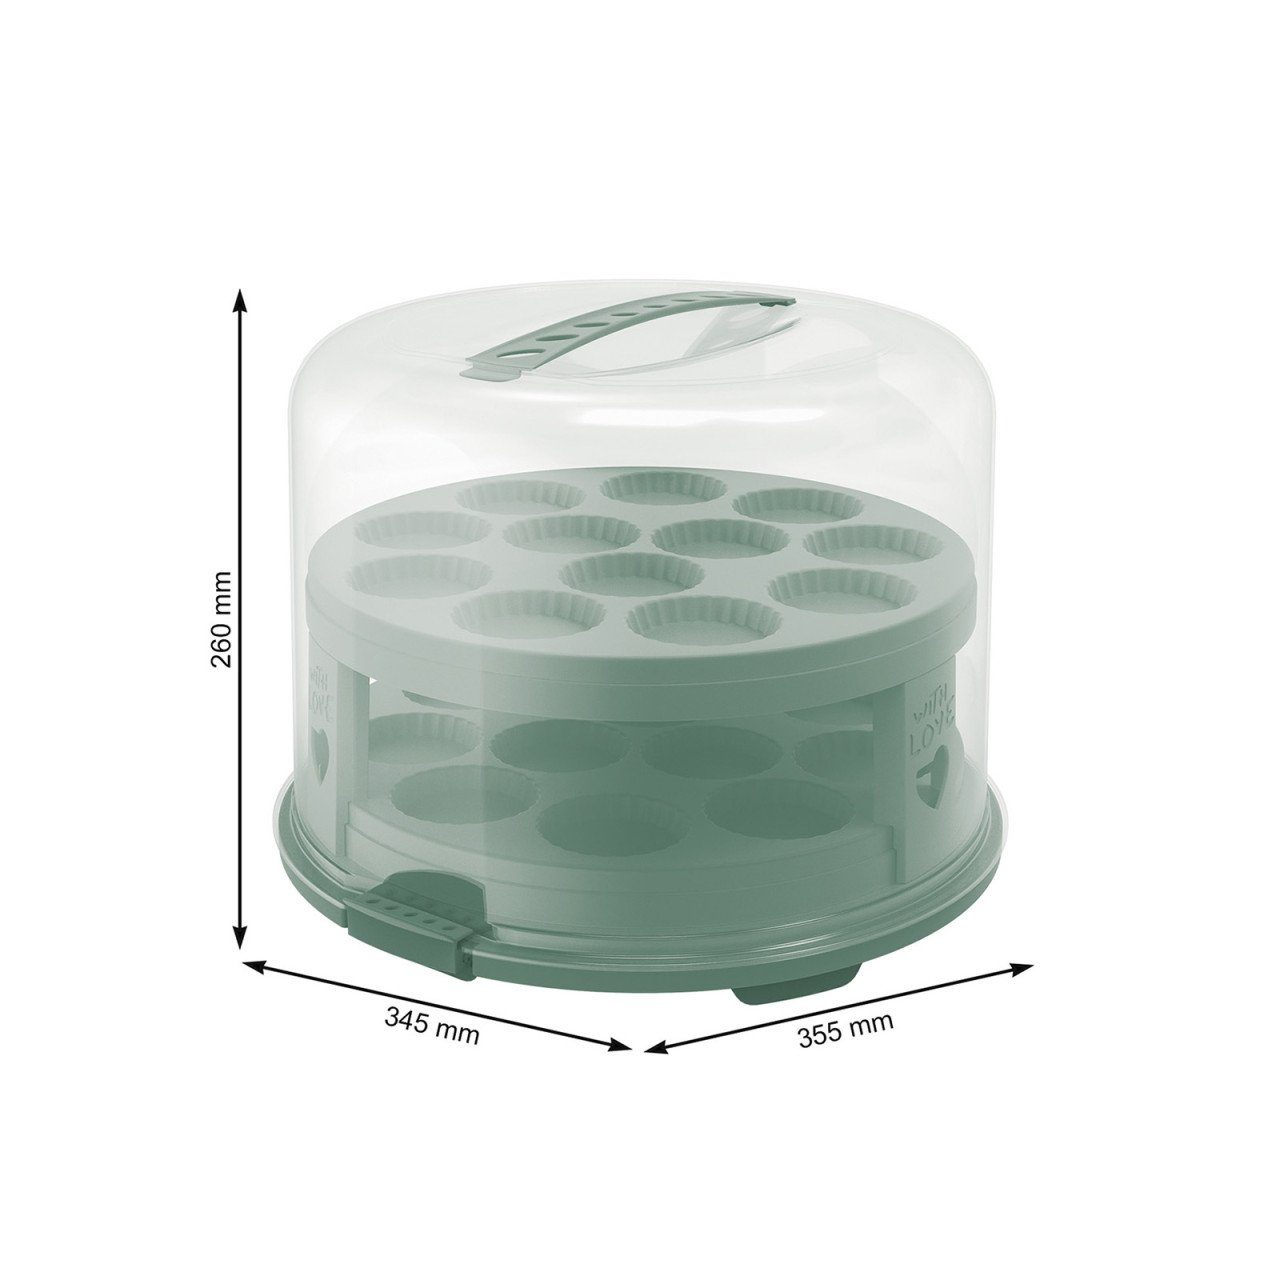 26 / inkl., ROTHO Trays Rotho Mistletoe cm Transparent Fresh mit Backblech Kunststoff XL Tortenglocke grün